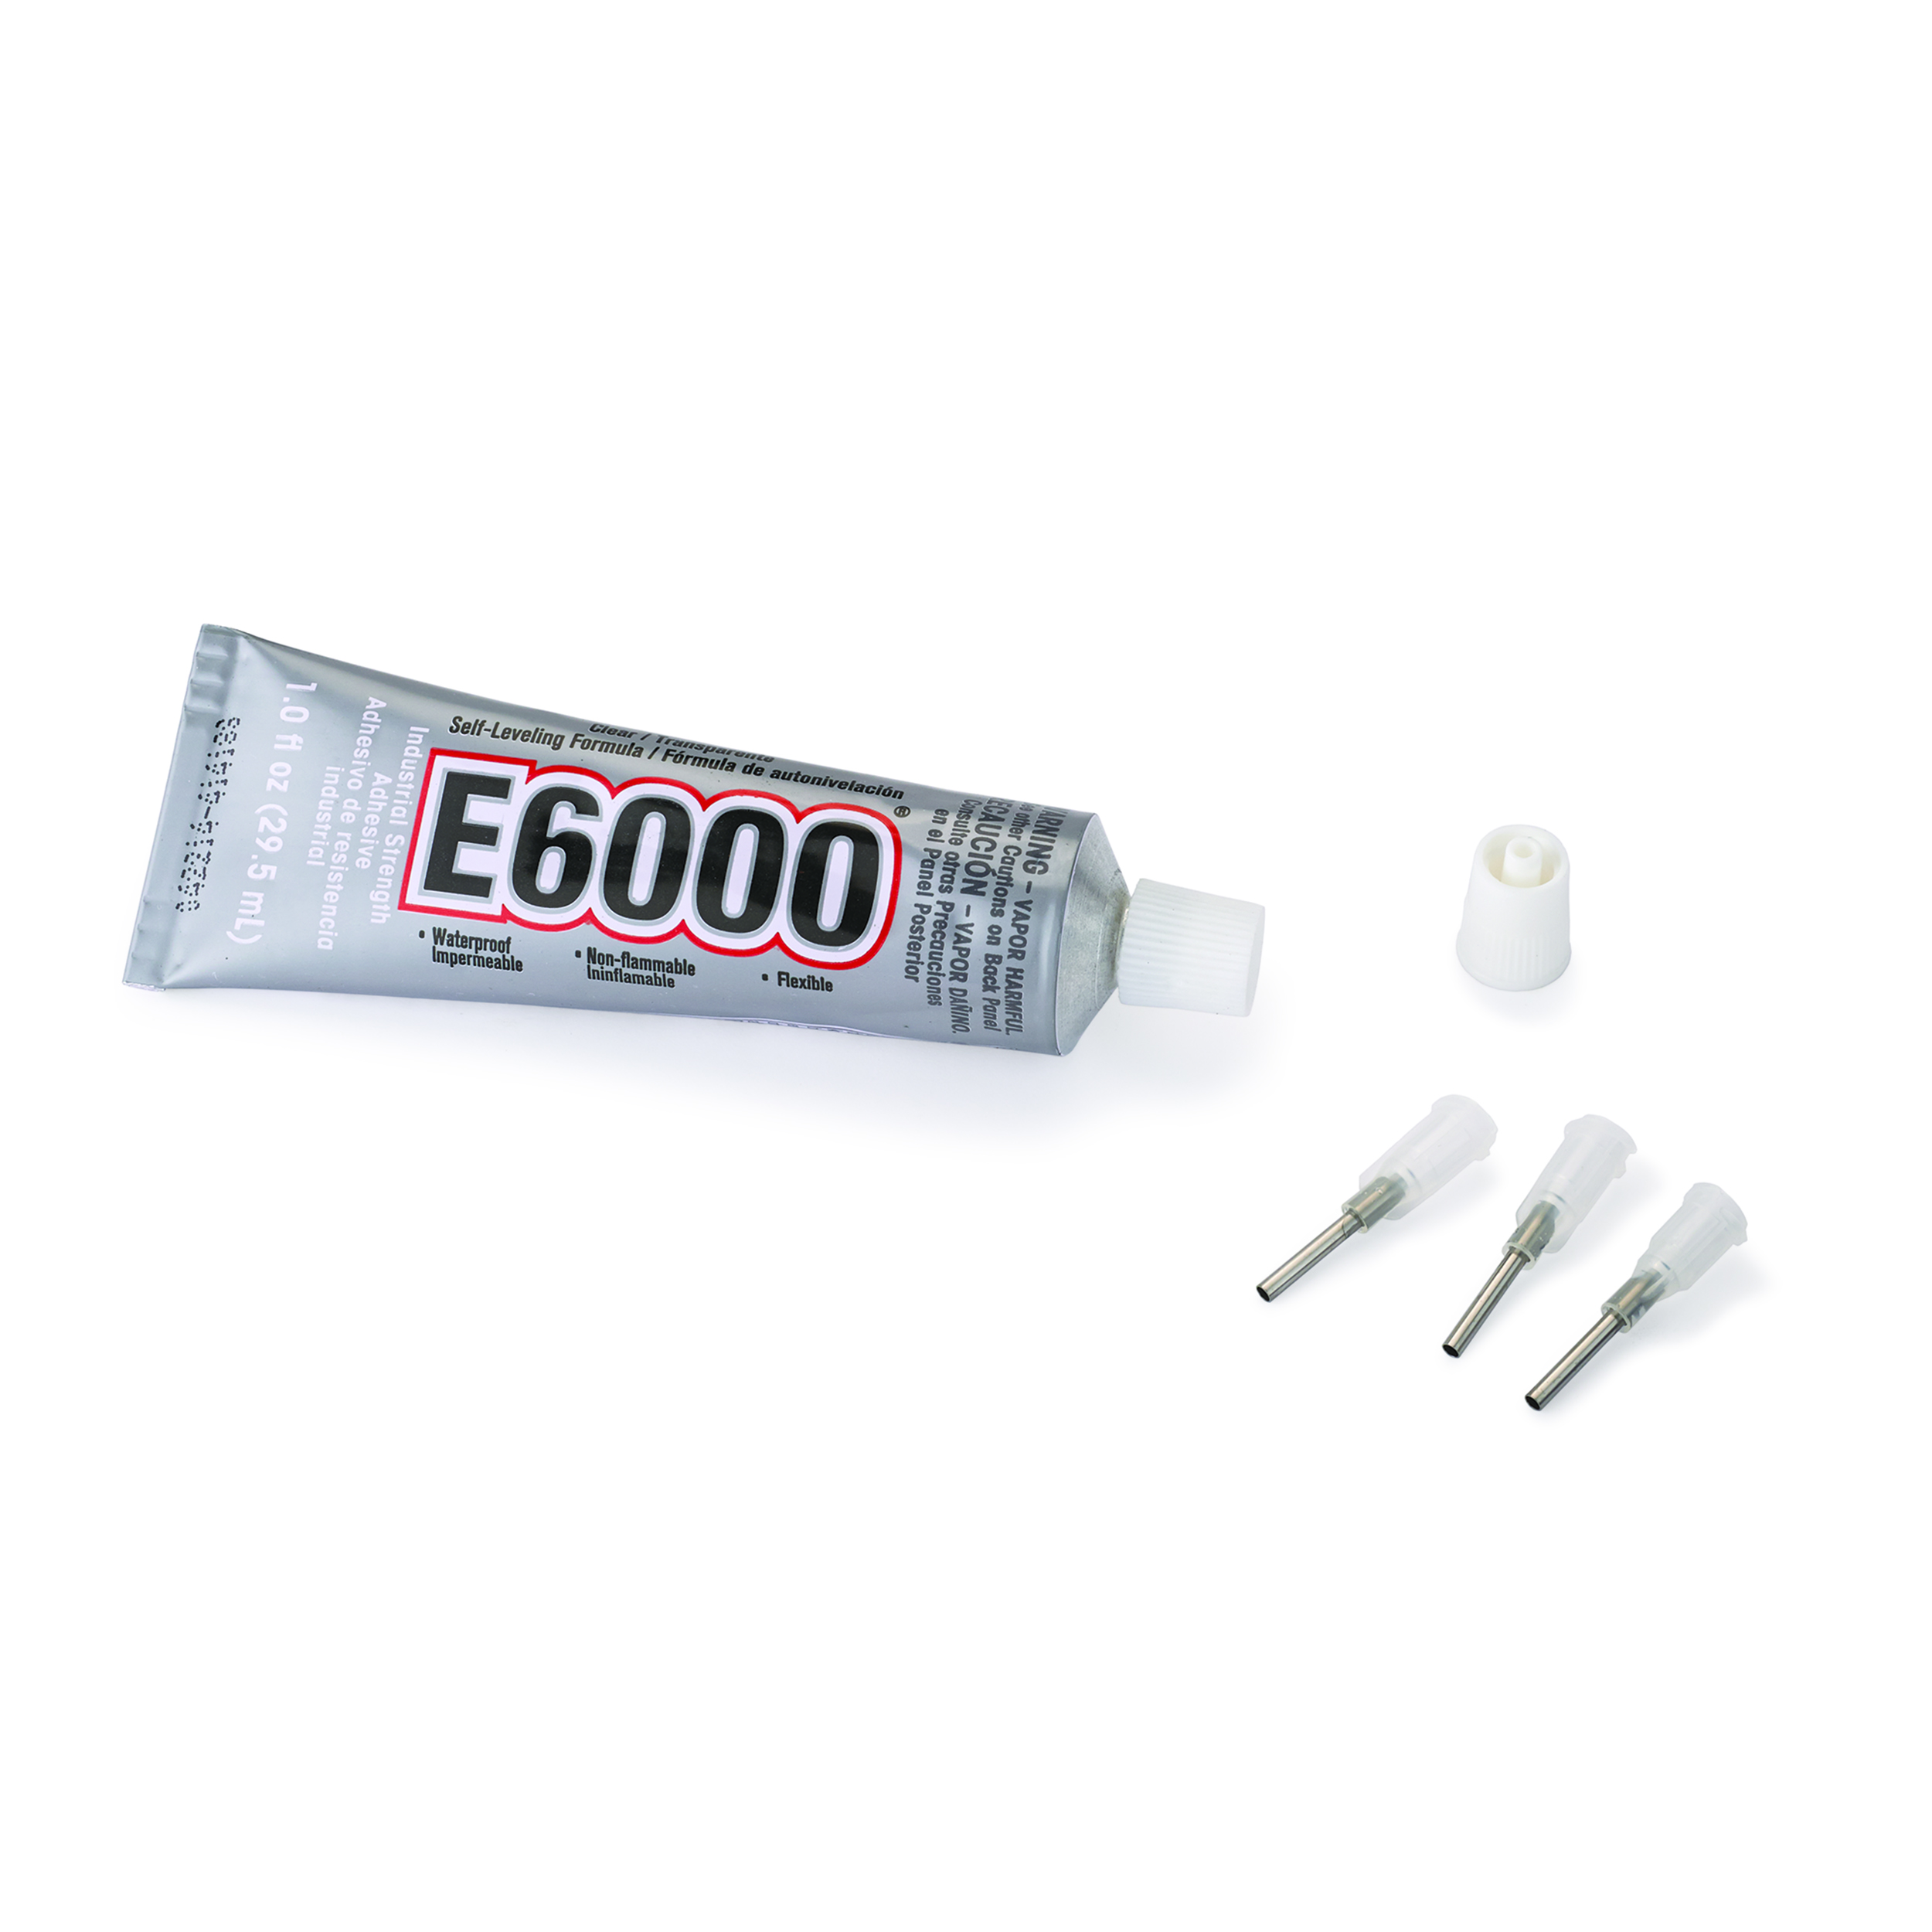 E-6000 Adhesive With Precision Tips, 1 Oz